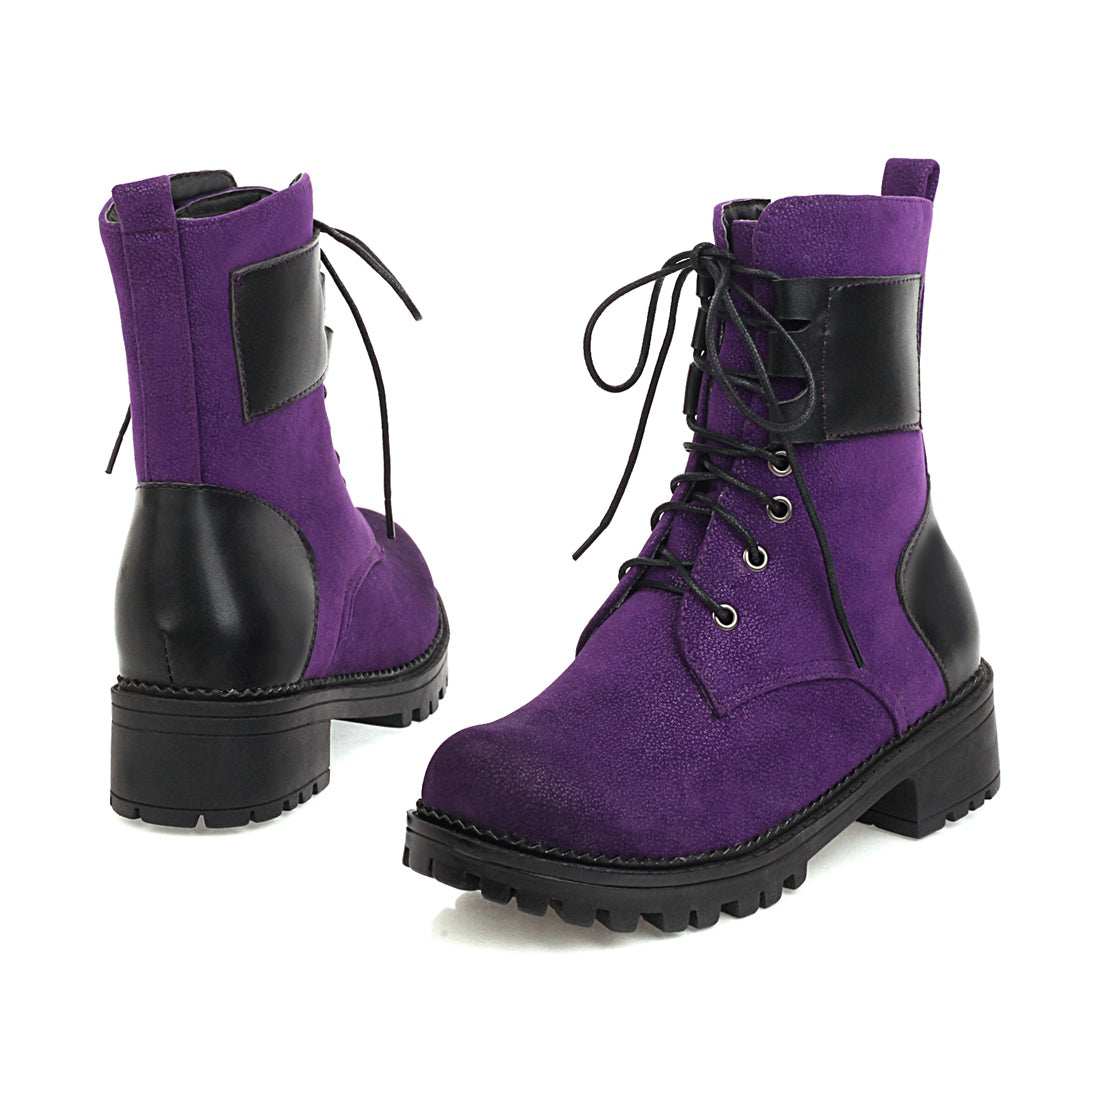 Bigsizeheels Colorblock retro fashion Martin boots - Purple freeshipping - bigsizeheel®-size5-size15 -All Plus Sizes Available!